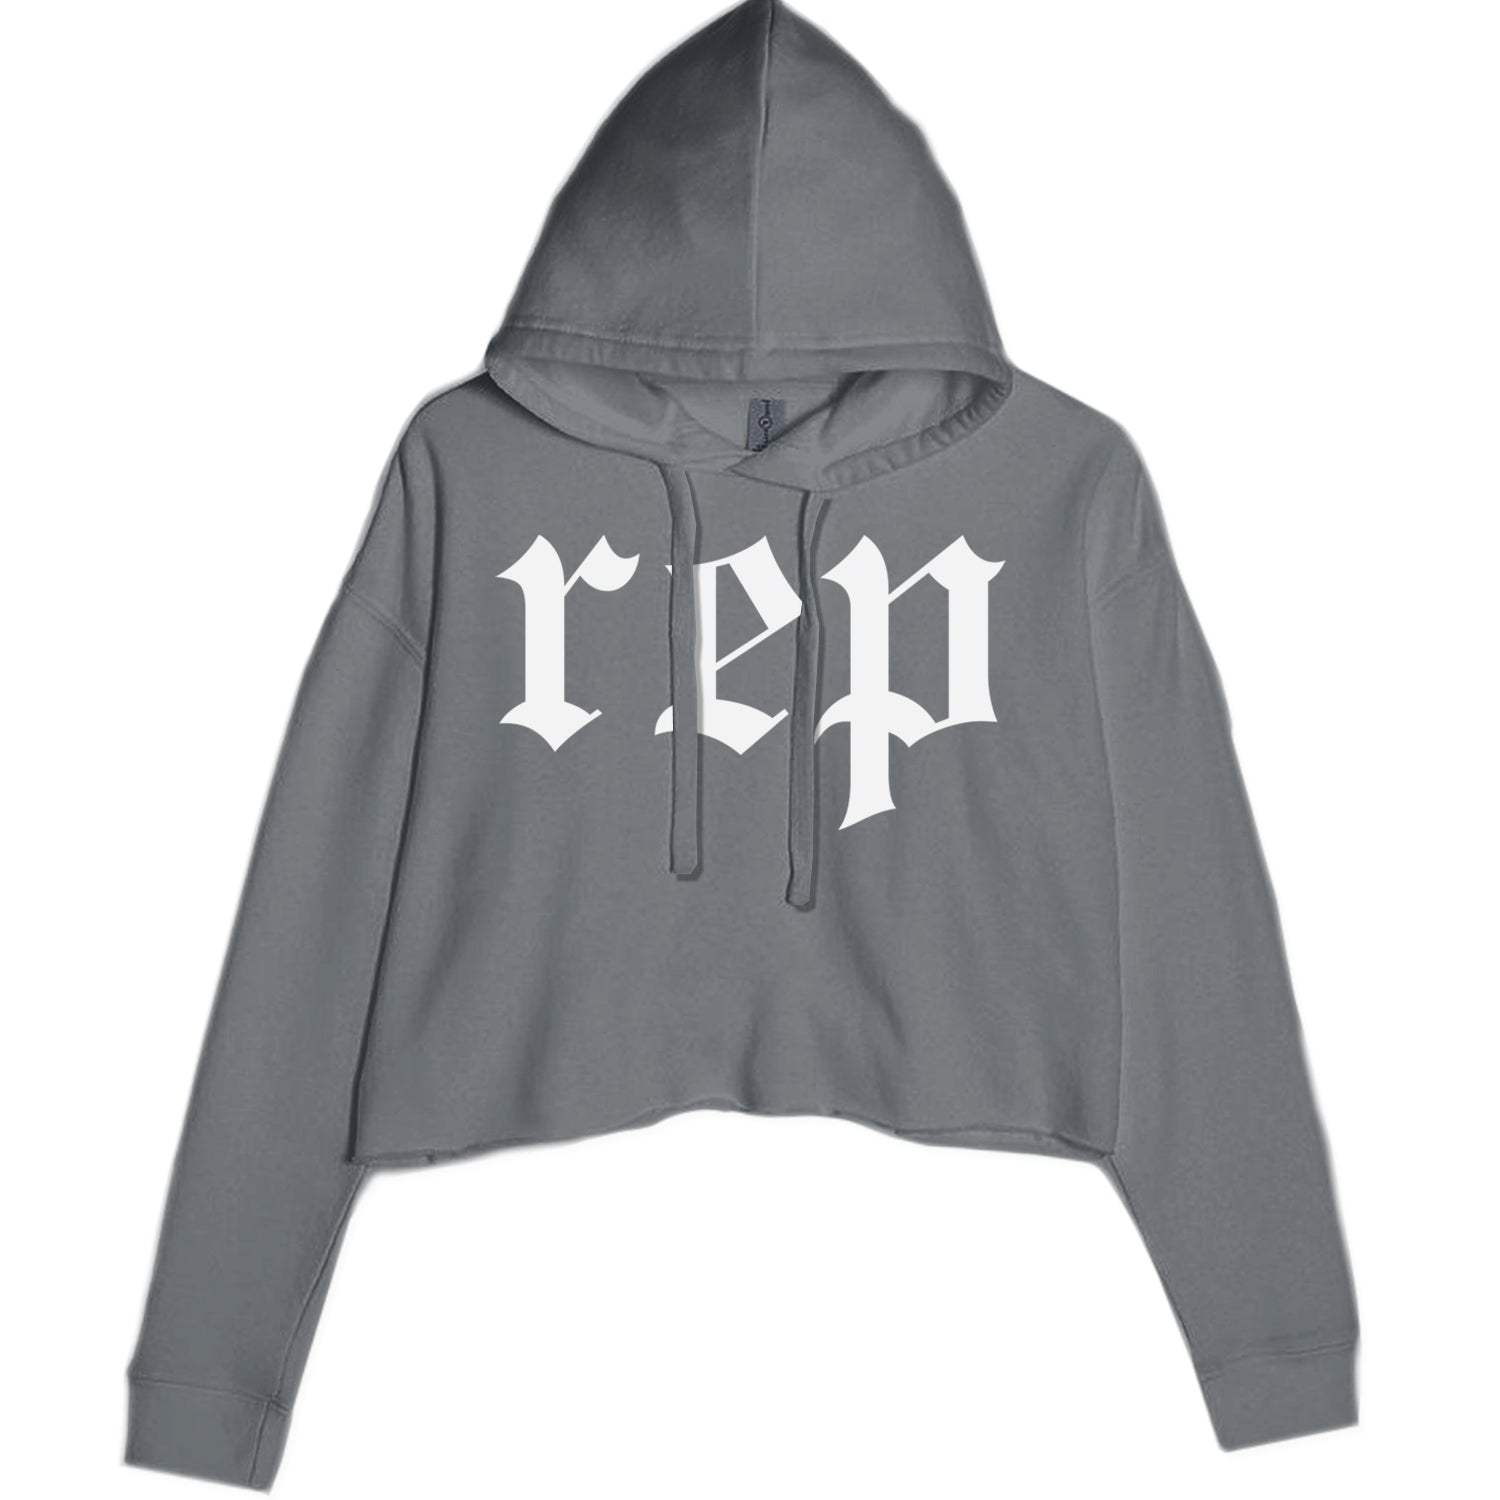 REP Reputation Eras Music Lover Gift Fan Favorite Cropped Hoodie Sweatshirt Charcoal Grey